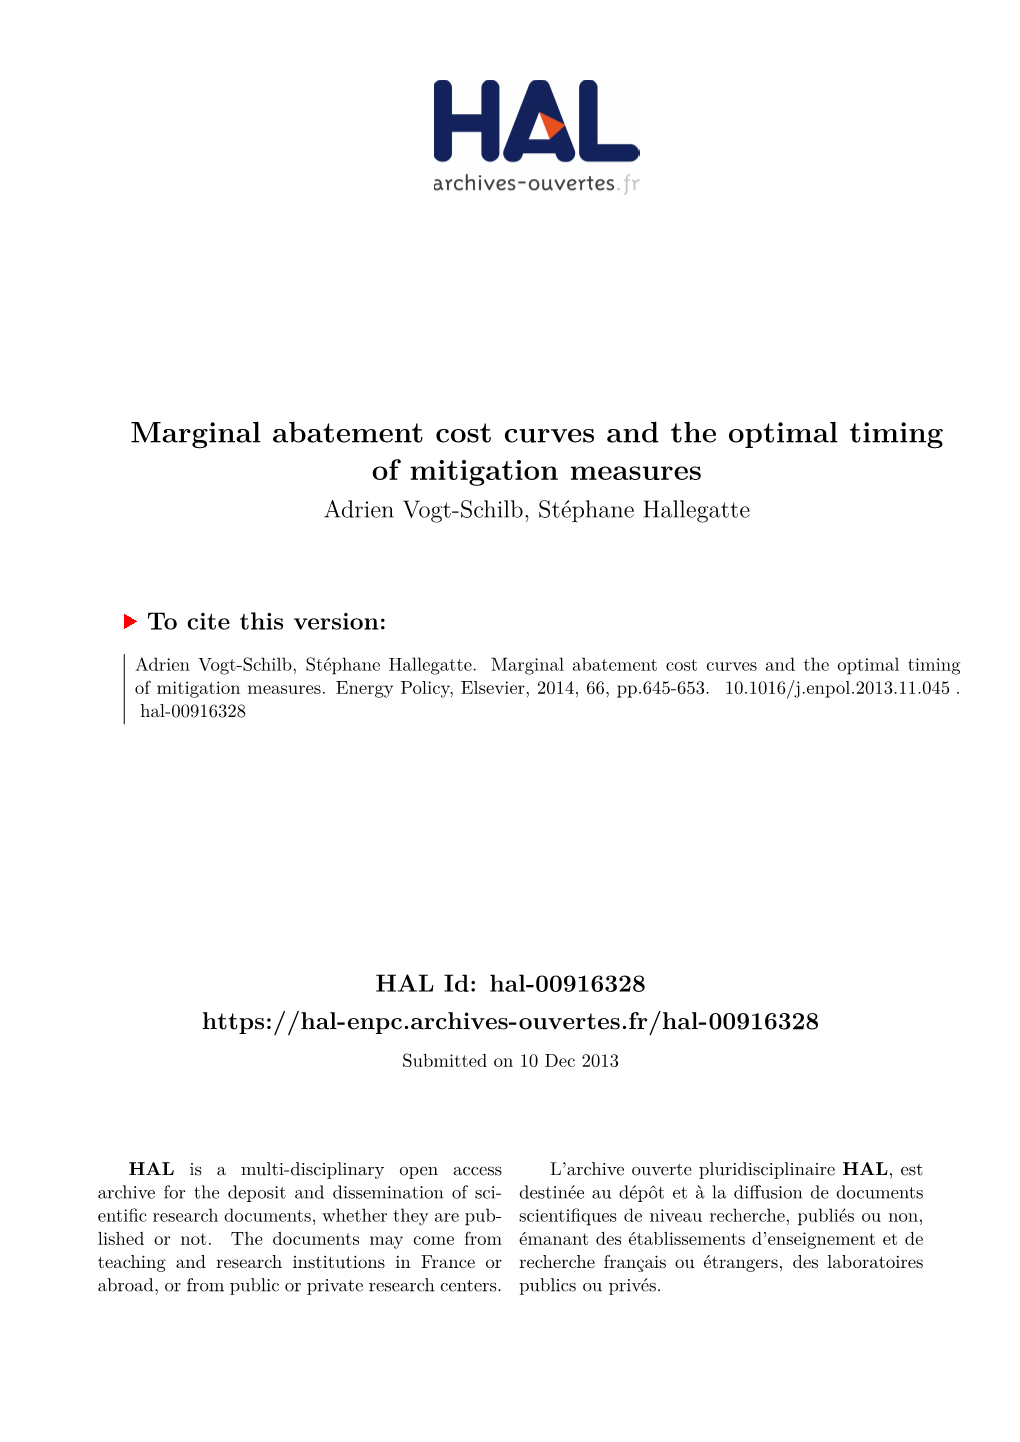 Marginal Abatement Cost Curves and the Optimal Timing of Mitigation Measures Adrien Vogt-Schilb, Stéphane Hallegatte